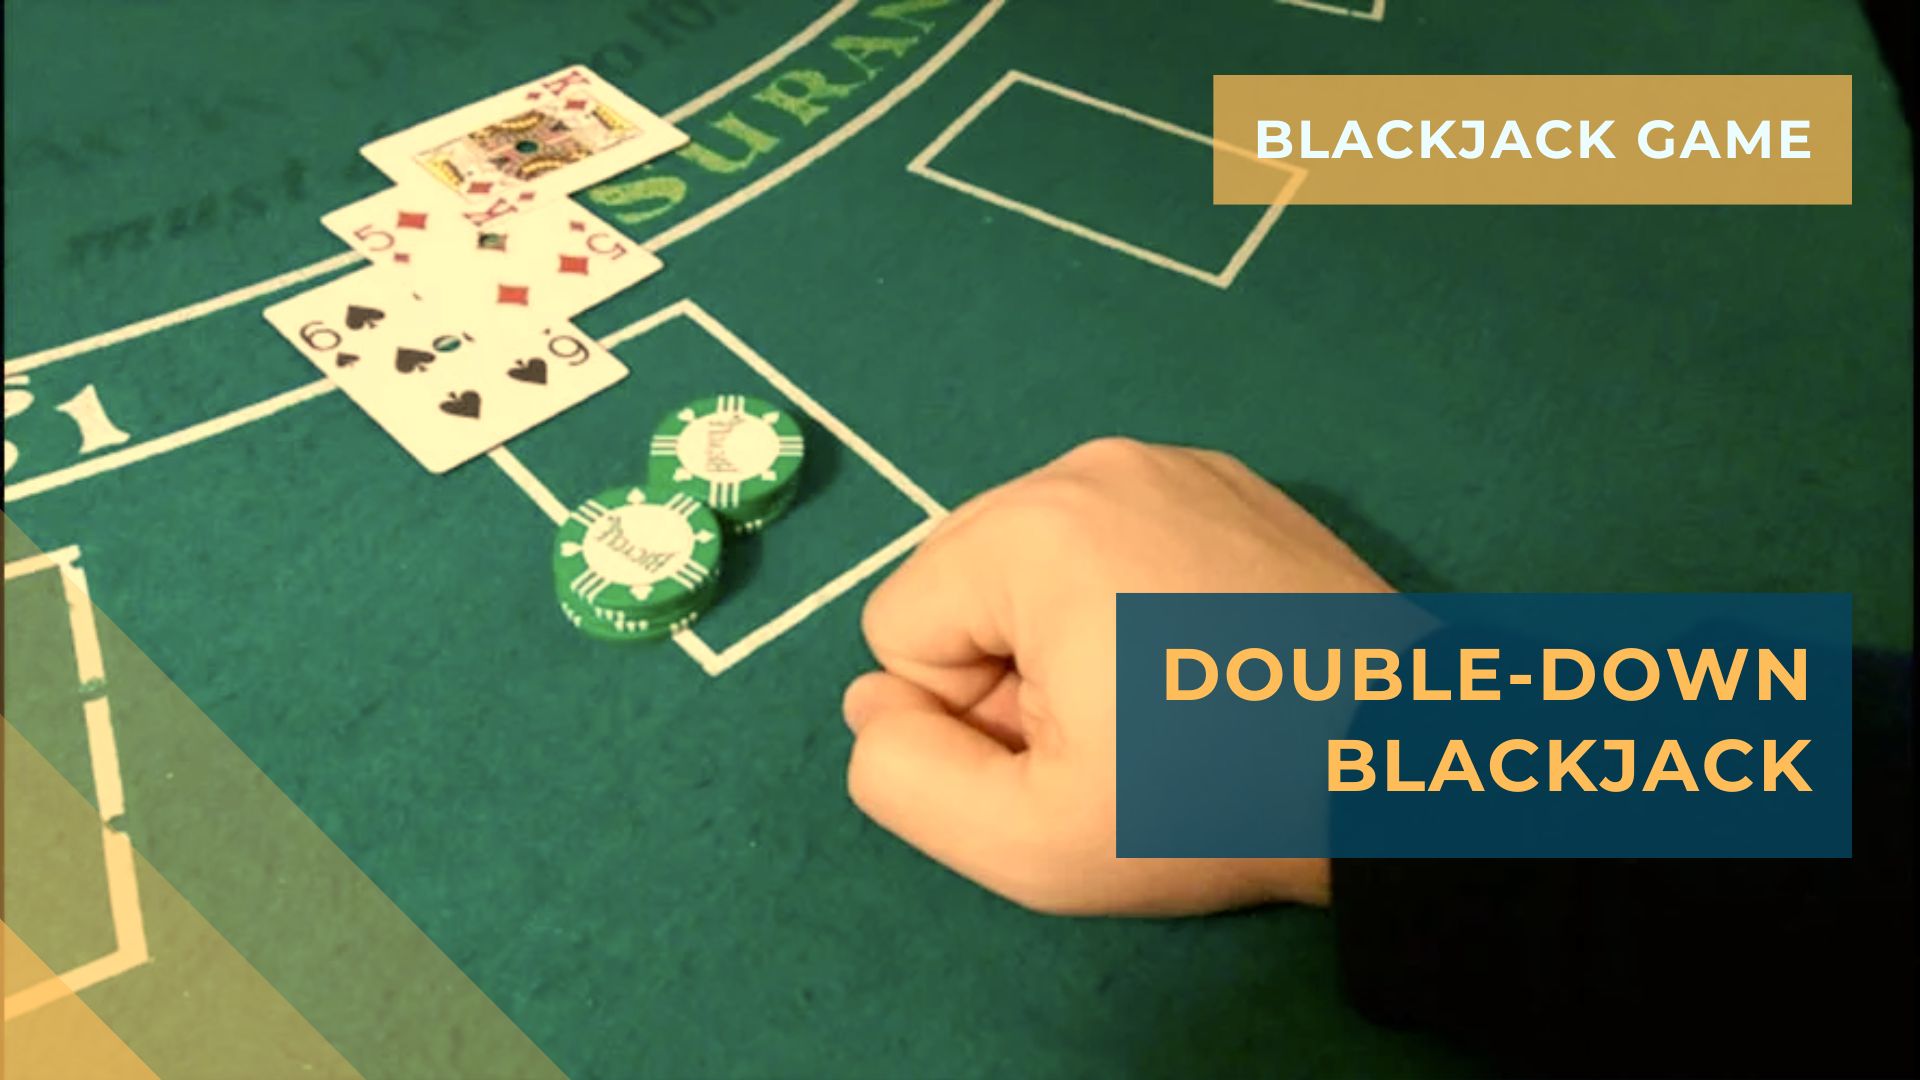 Double-down Blackjack